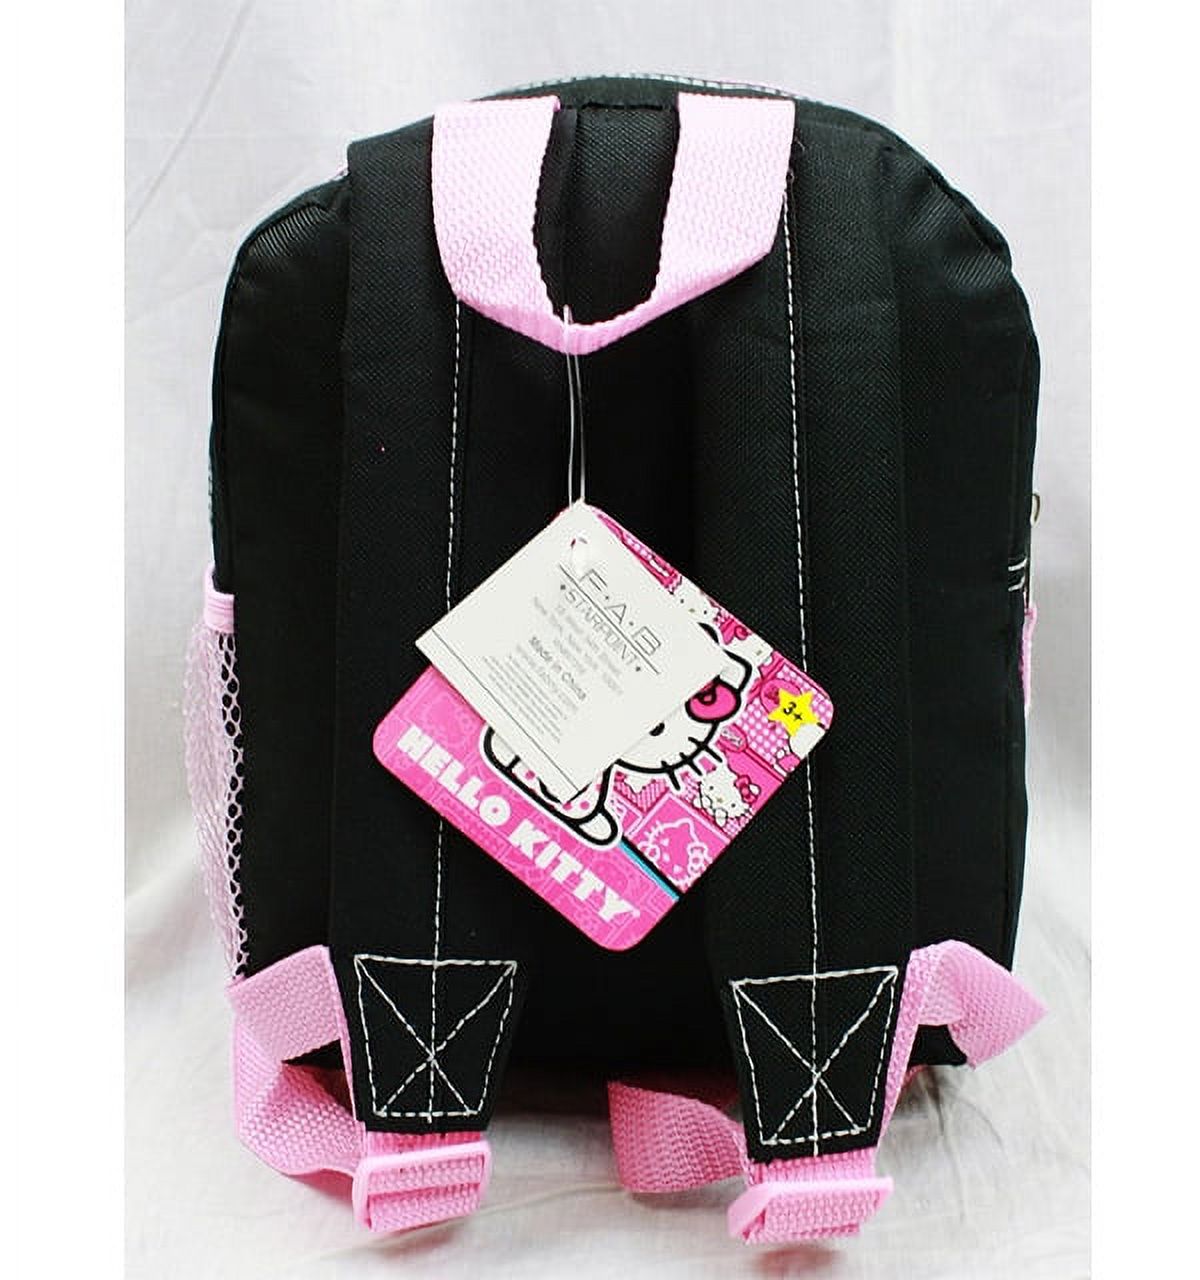 Mini Backpack - - Glitter Heart Black School Bag 10 New 83073 - image 3 of 3